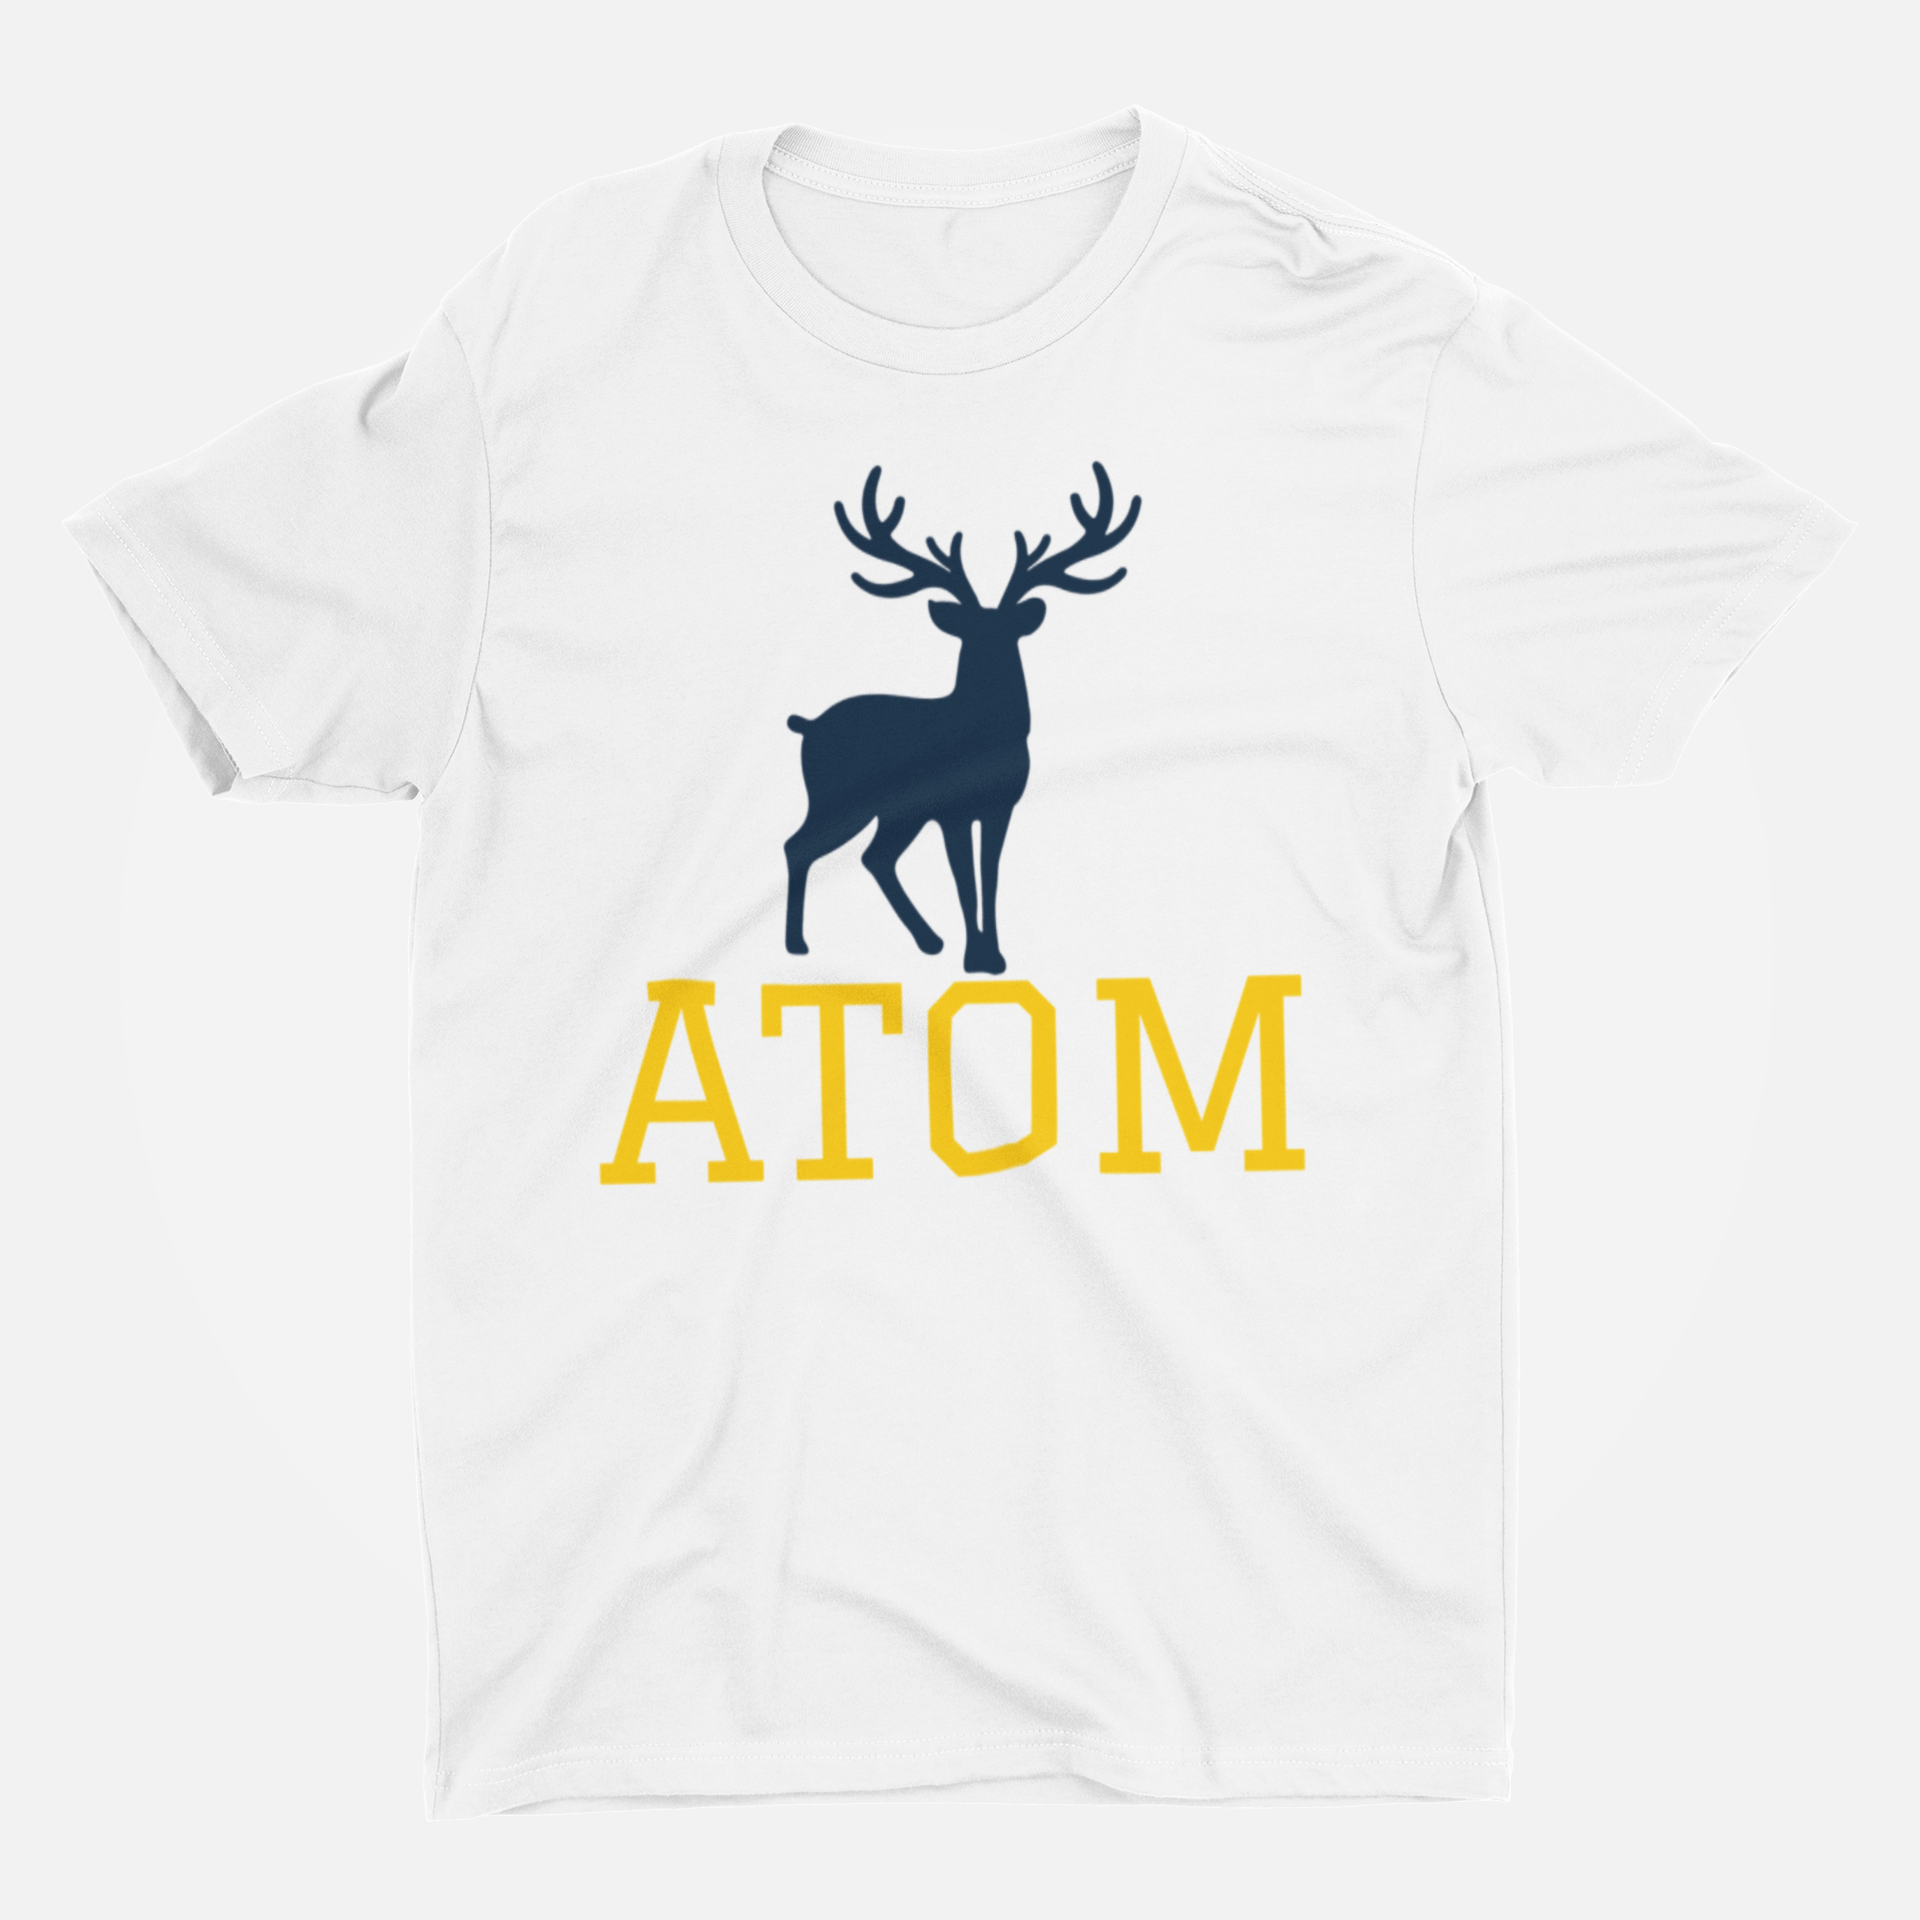 ATOM Signature College Font White Round Neck T-Shirt for Men.